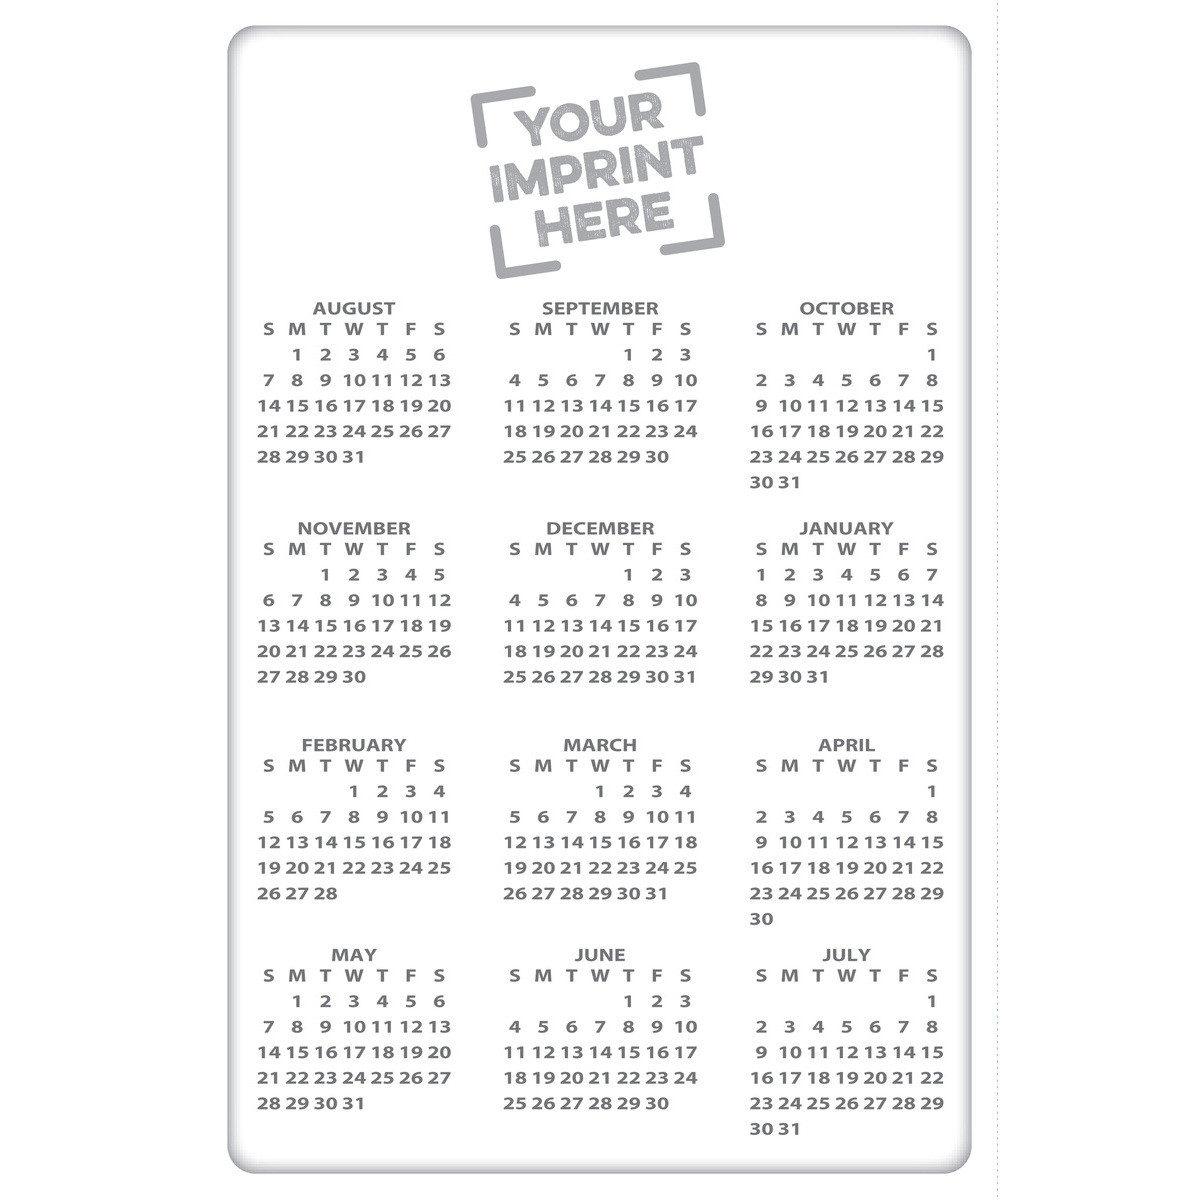 Custom Vertical Calendar Magnet - School